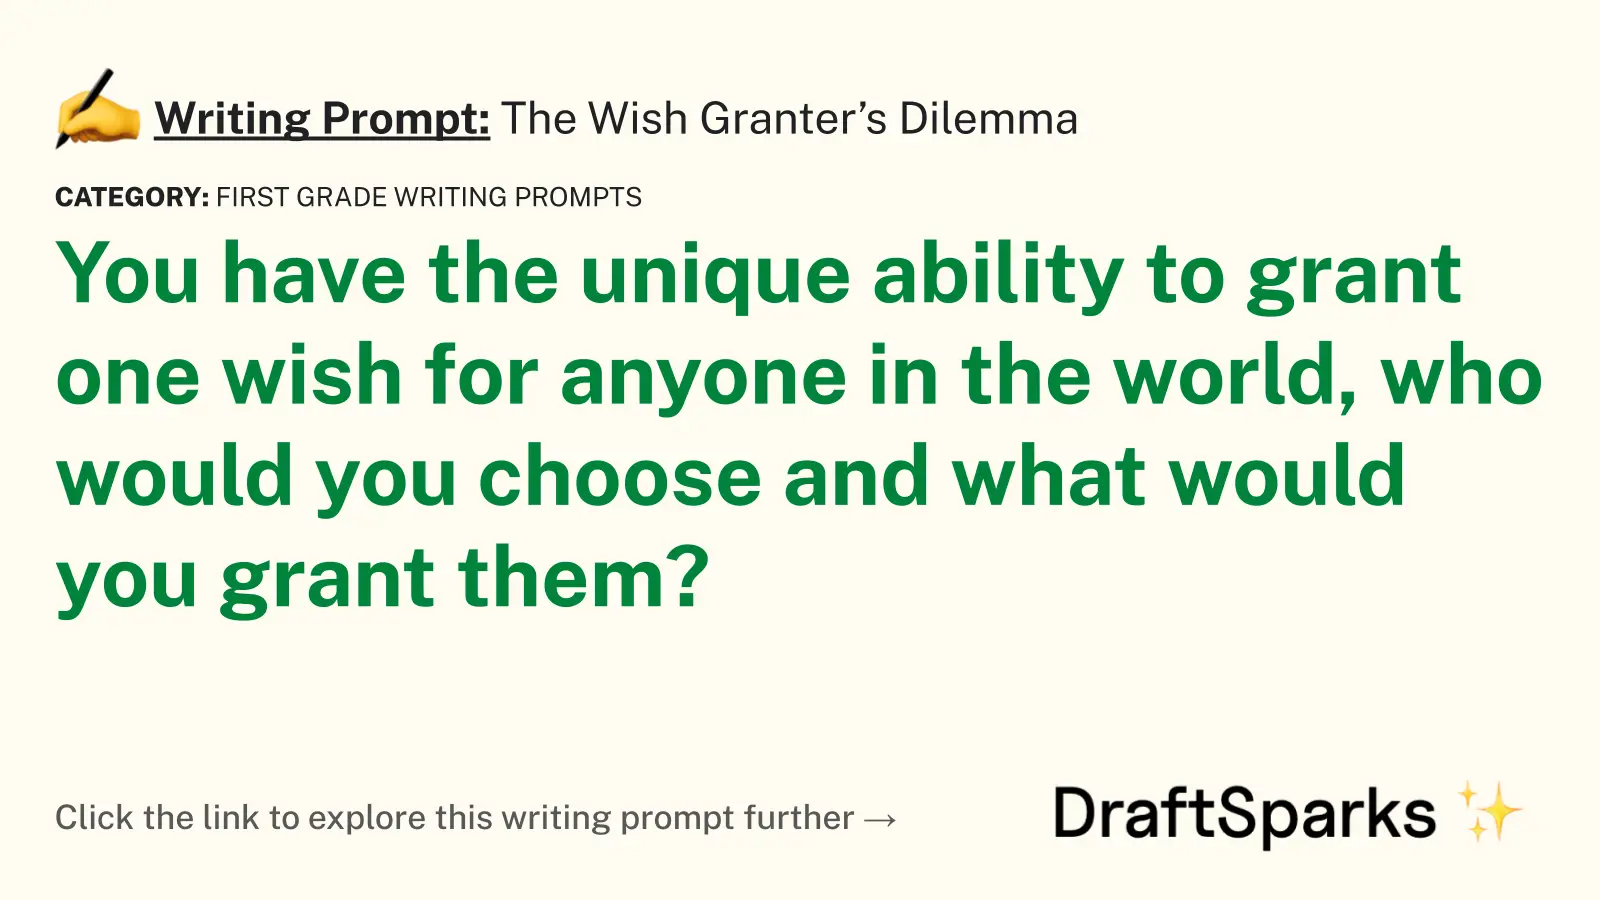 The Wish Granter’s Dilemma